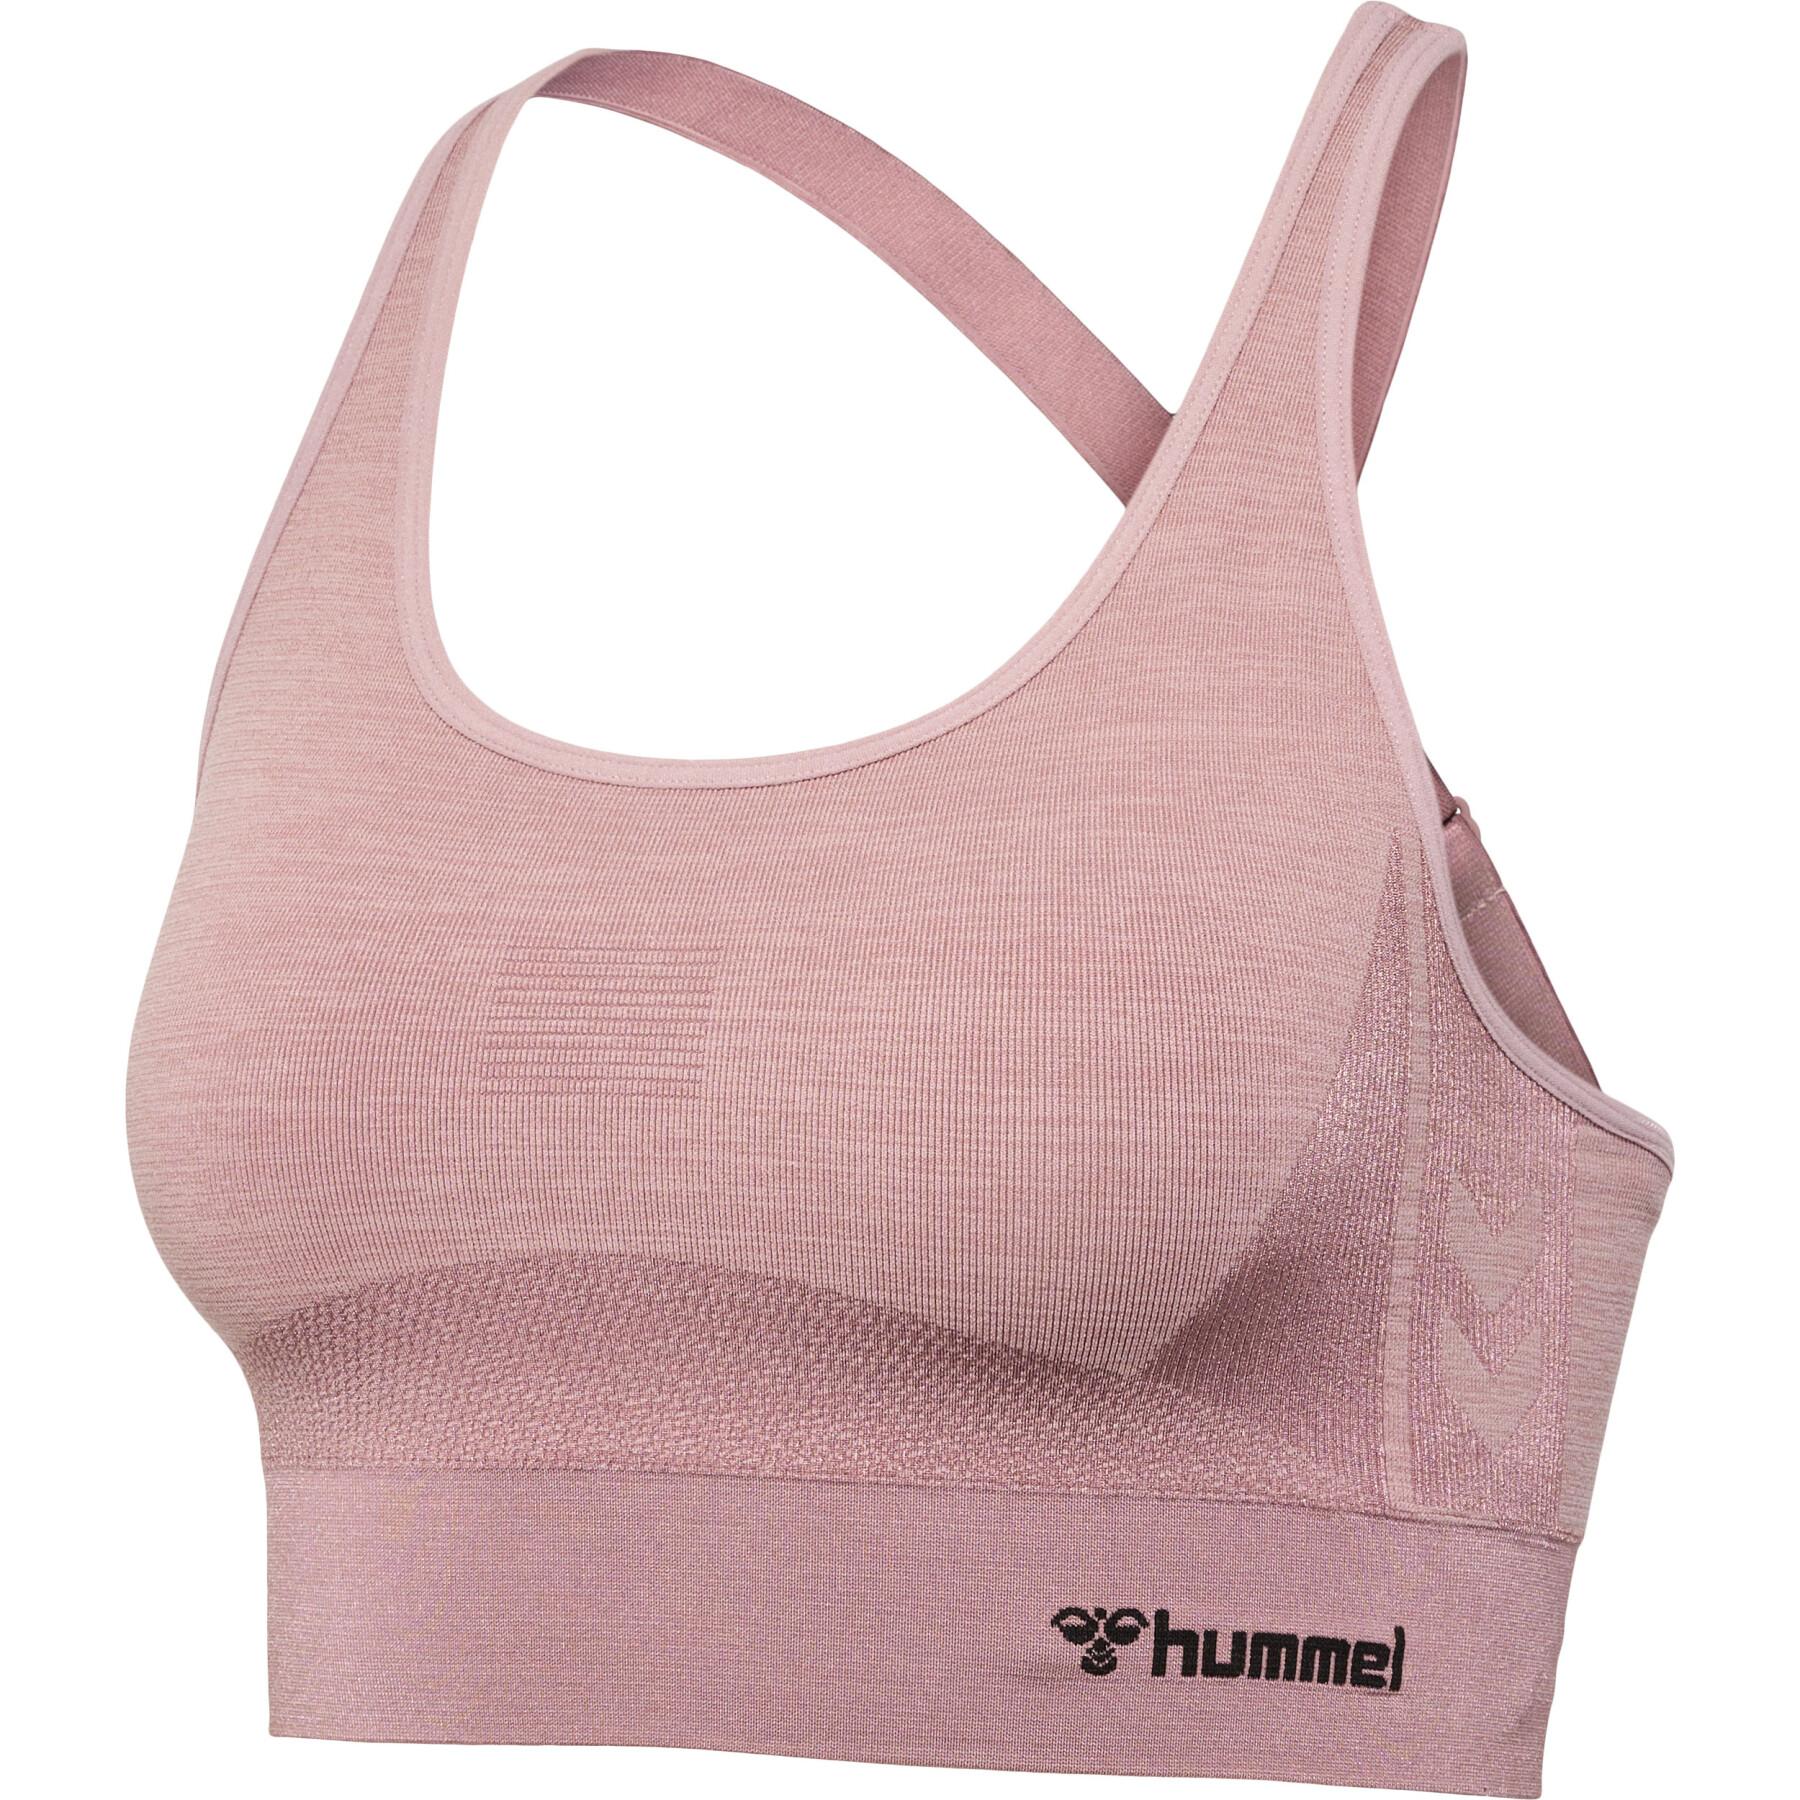 Seamless bra for women Hummel Tiffy - Hummel - Brands - Lifestyle